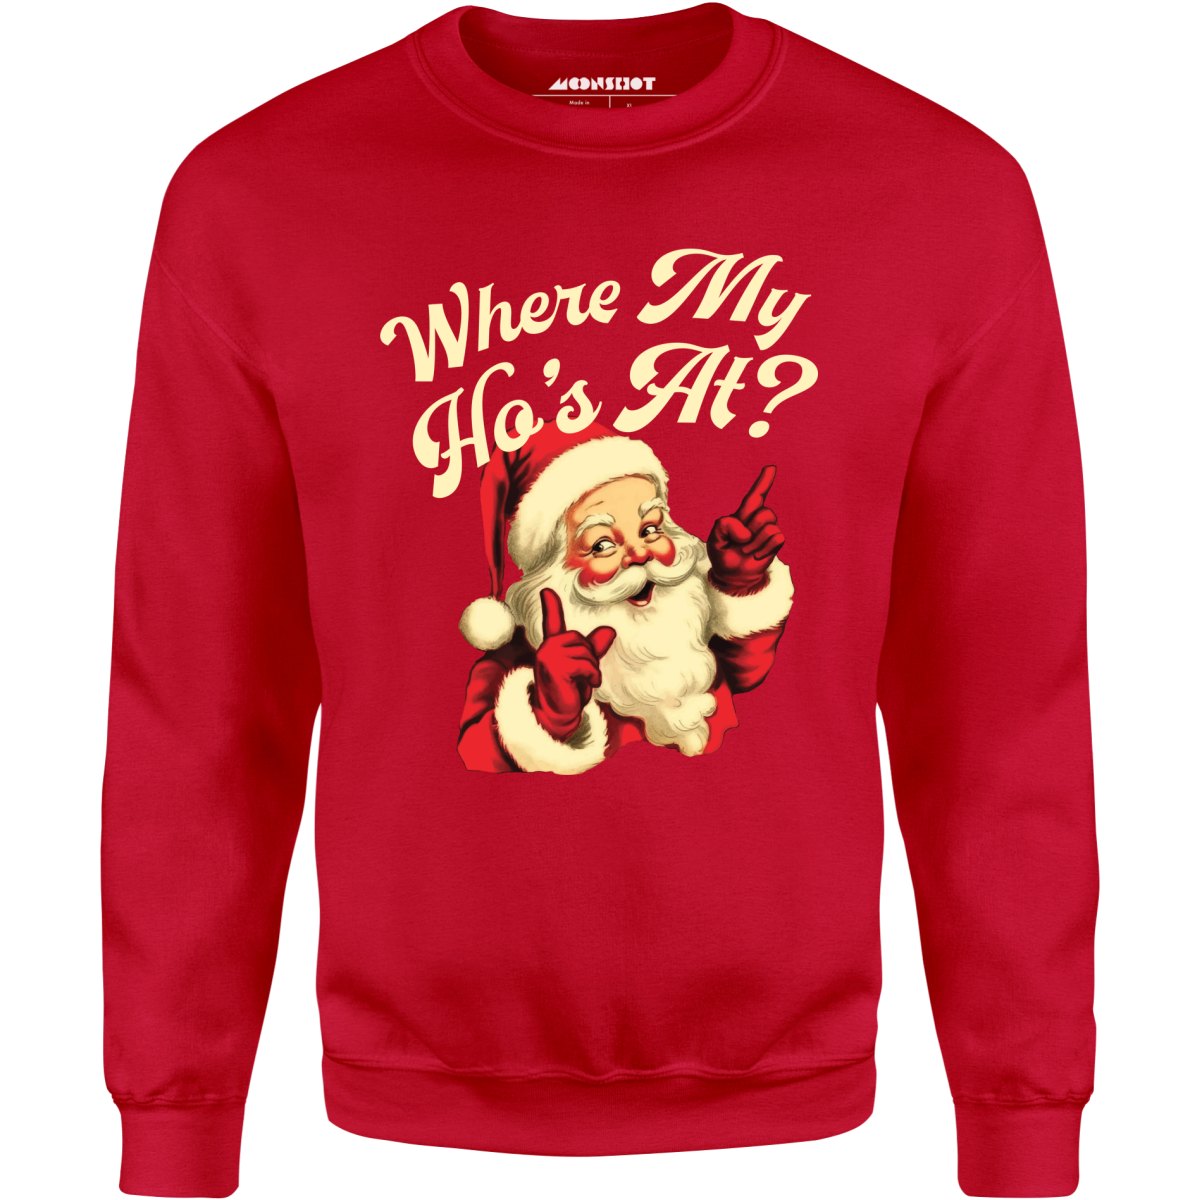 Where My Ho's At? - Unisex Sweatshirt